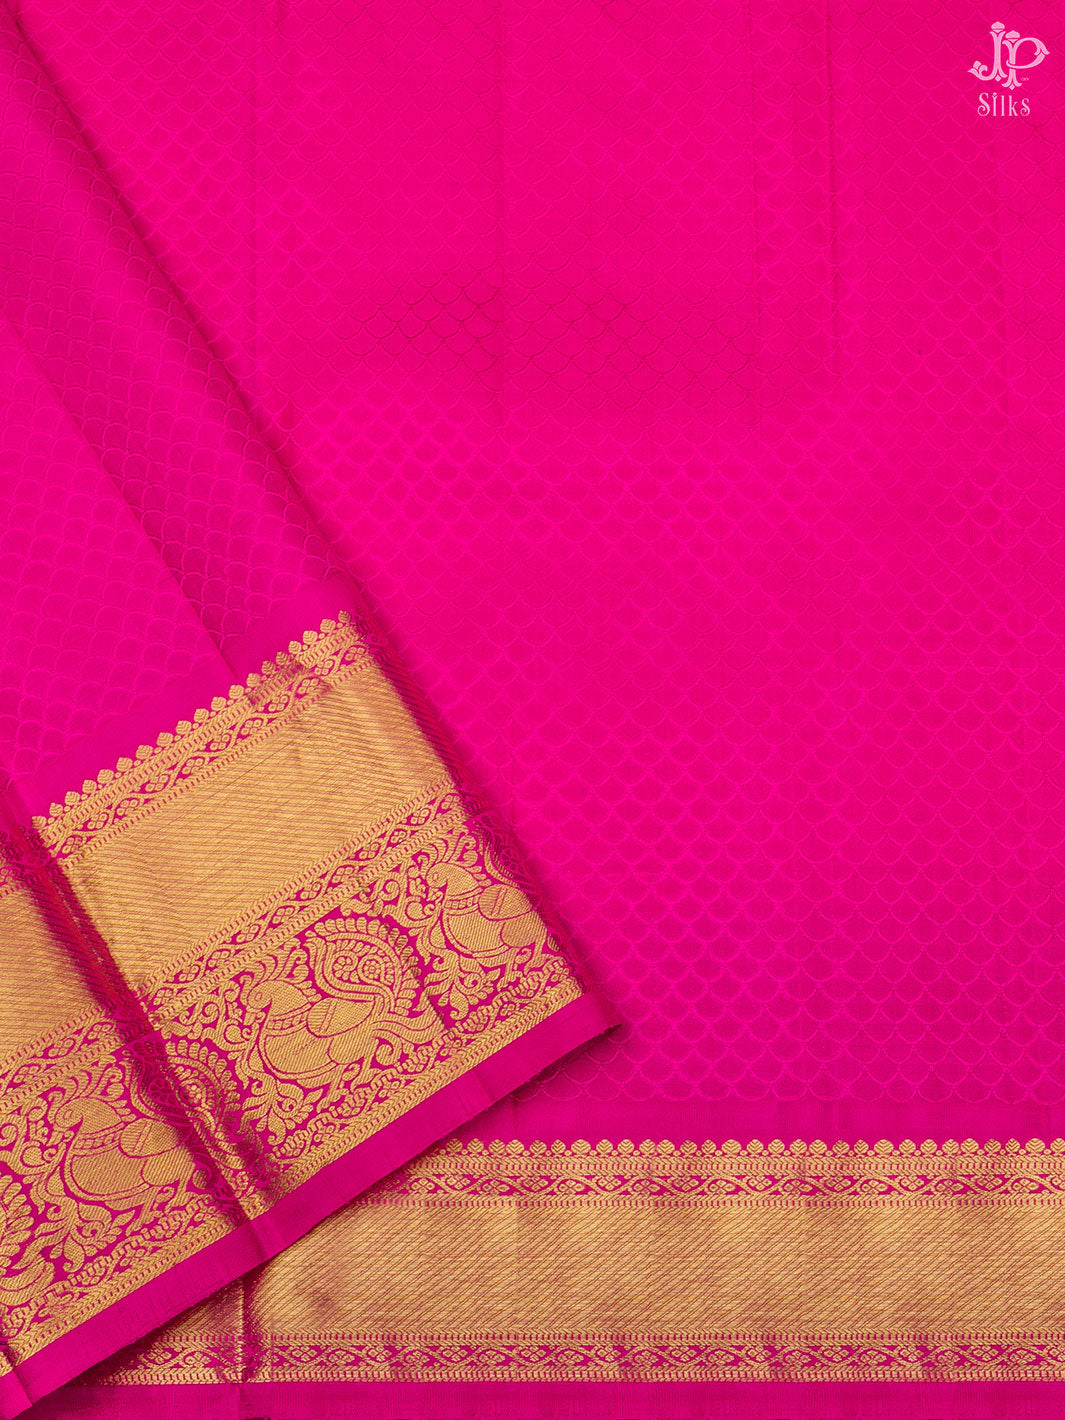 Yellow and Pink Kanchipuram Silk Saree - A7033 - View 4